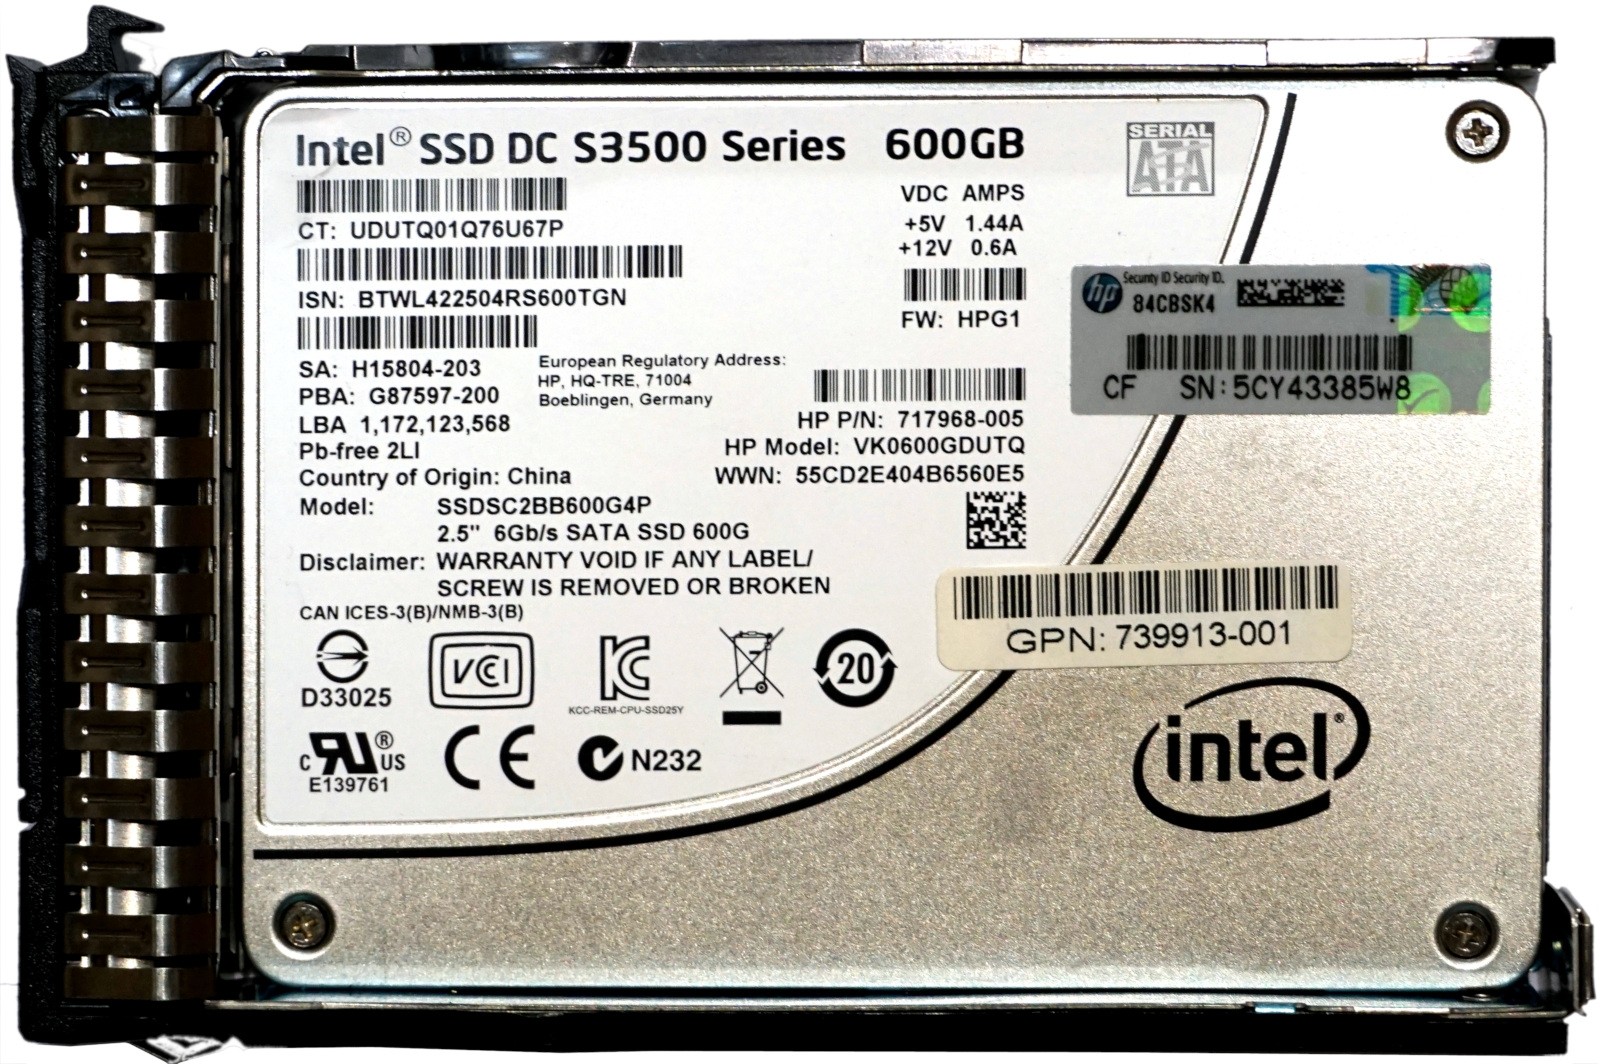 HP (717968-005) 600GB Value Endurance SATA III (2.5") 6Gbps SSD Gen8 Hot-Swap